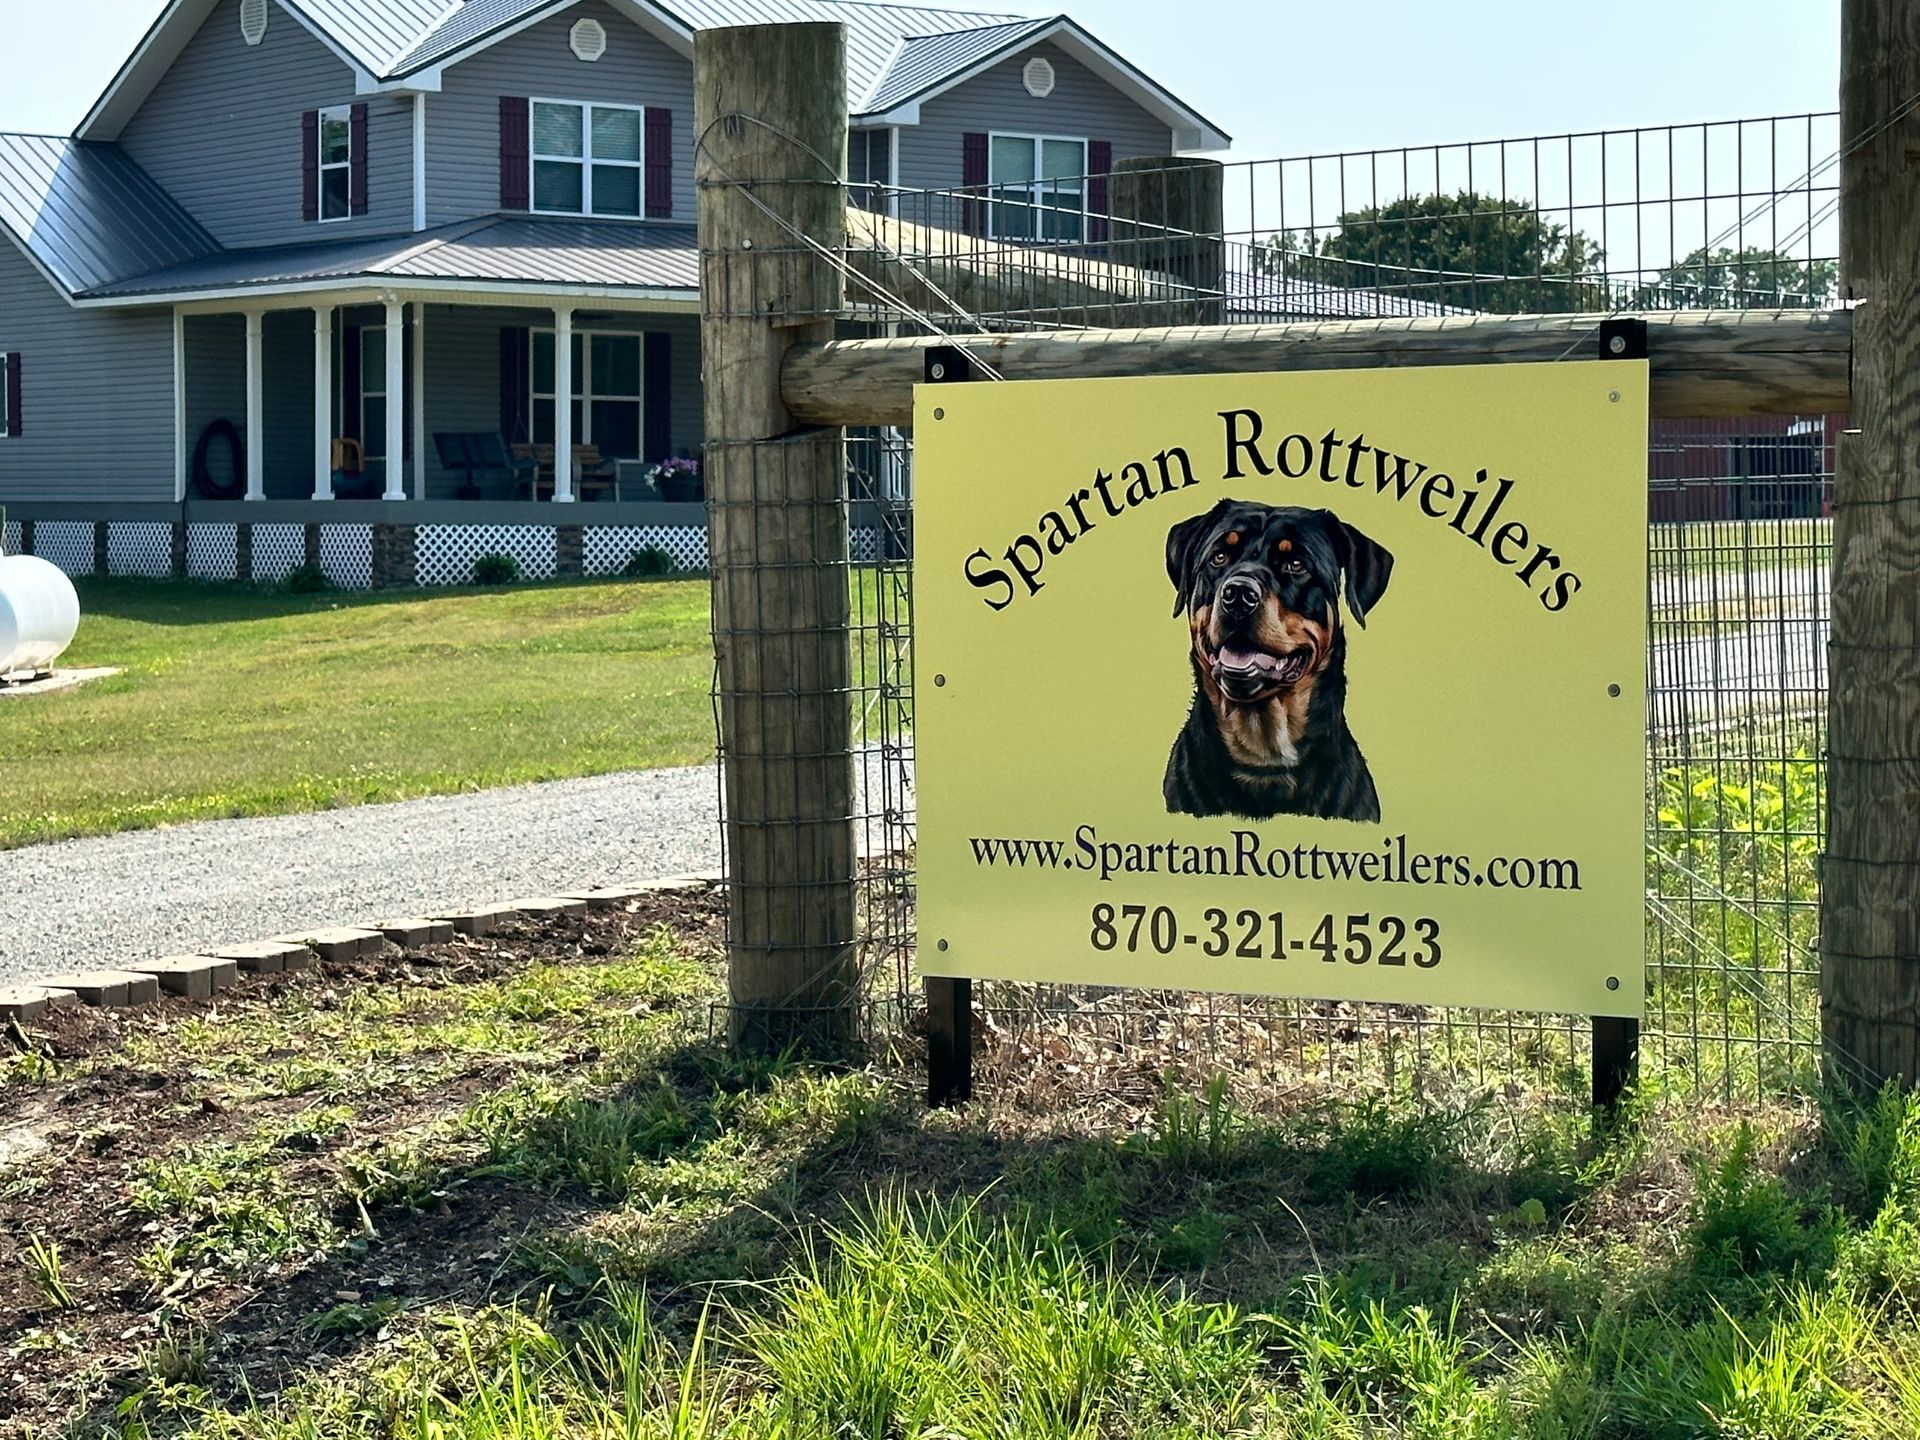 Spartan Rottweiler's home property in Ozarks of Arkansas